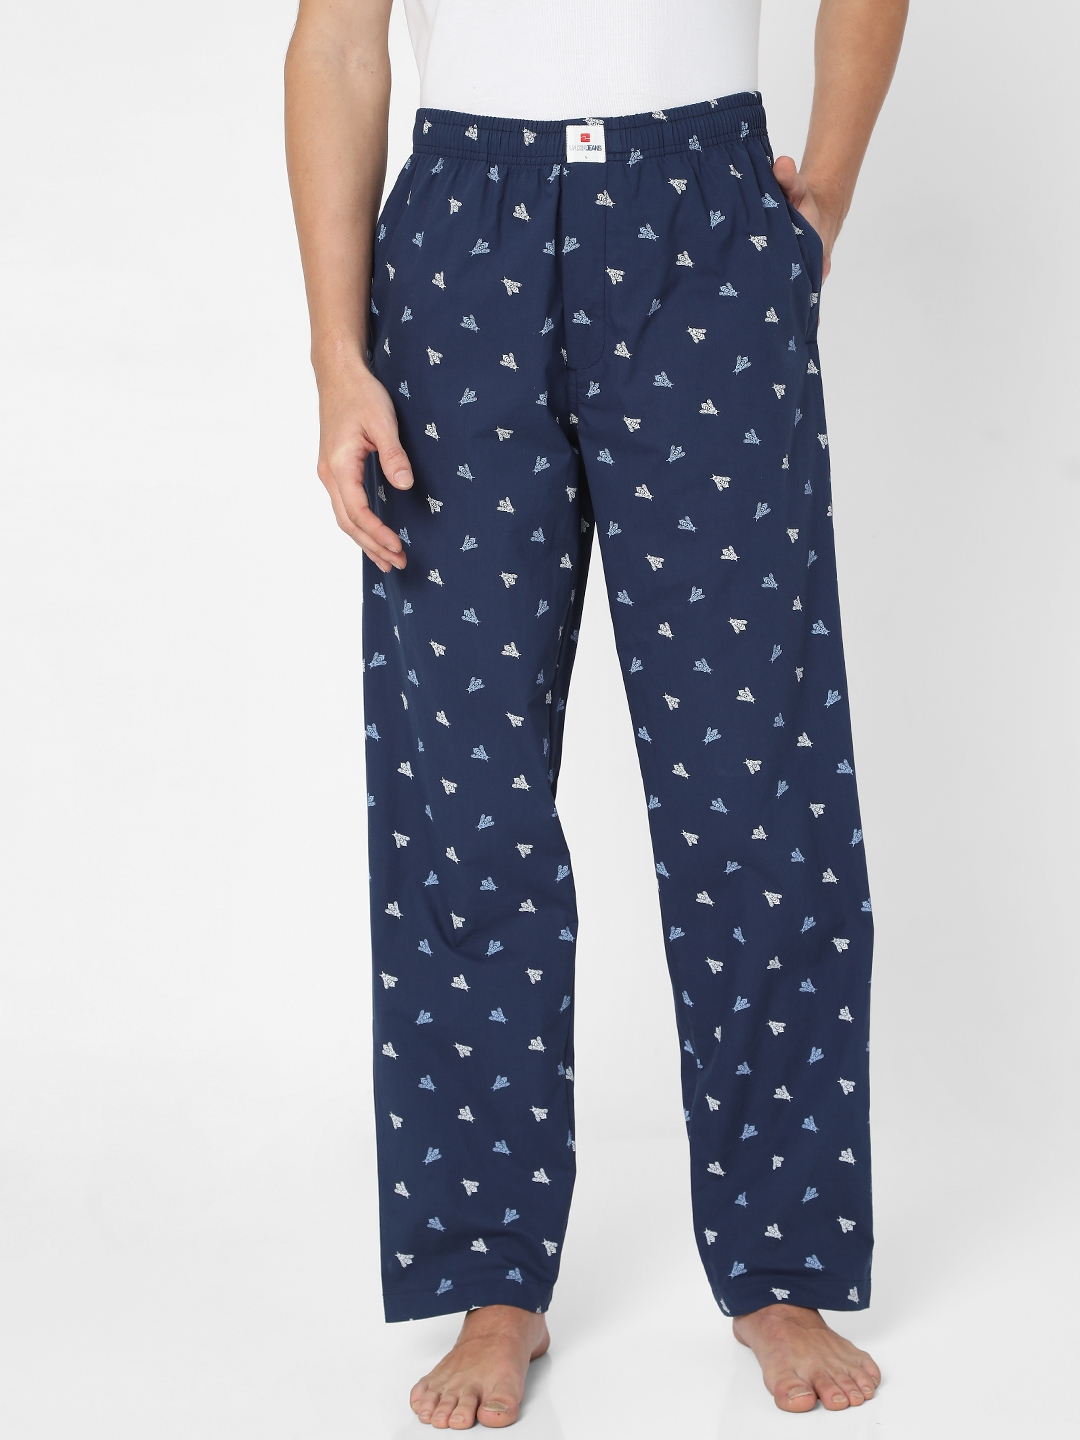 Underjeans by Spykar Men Navy Cotton Printed Pyjama